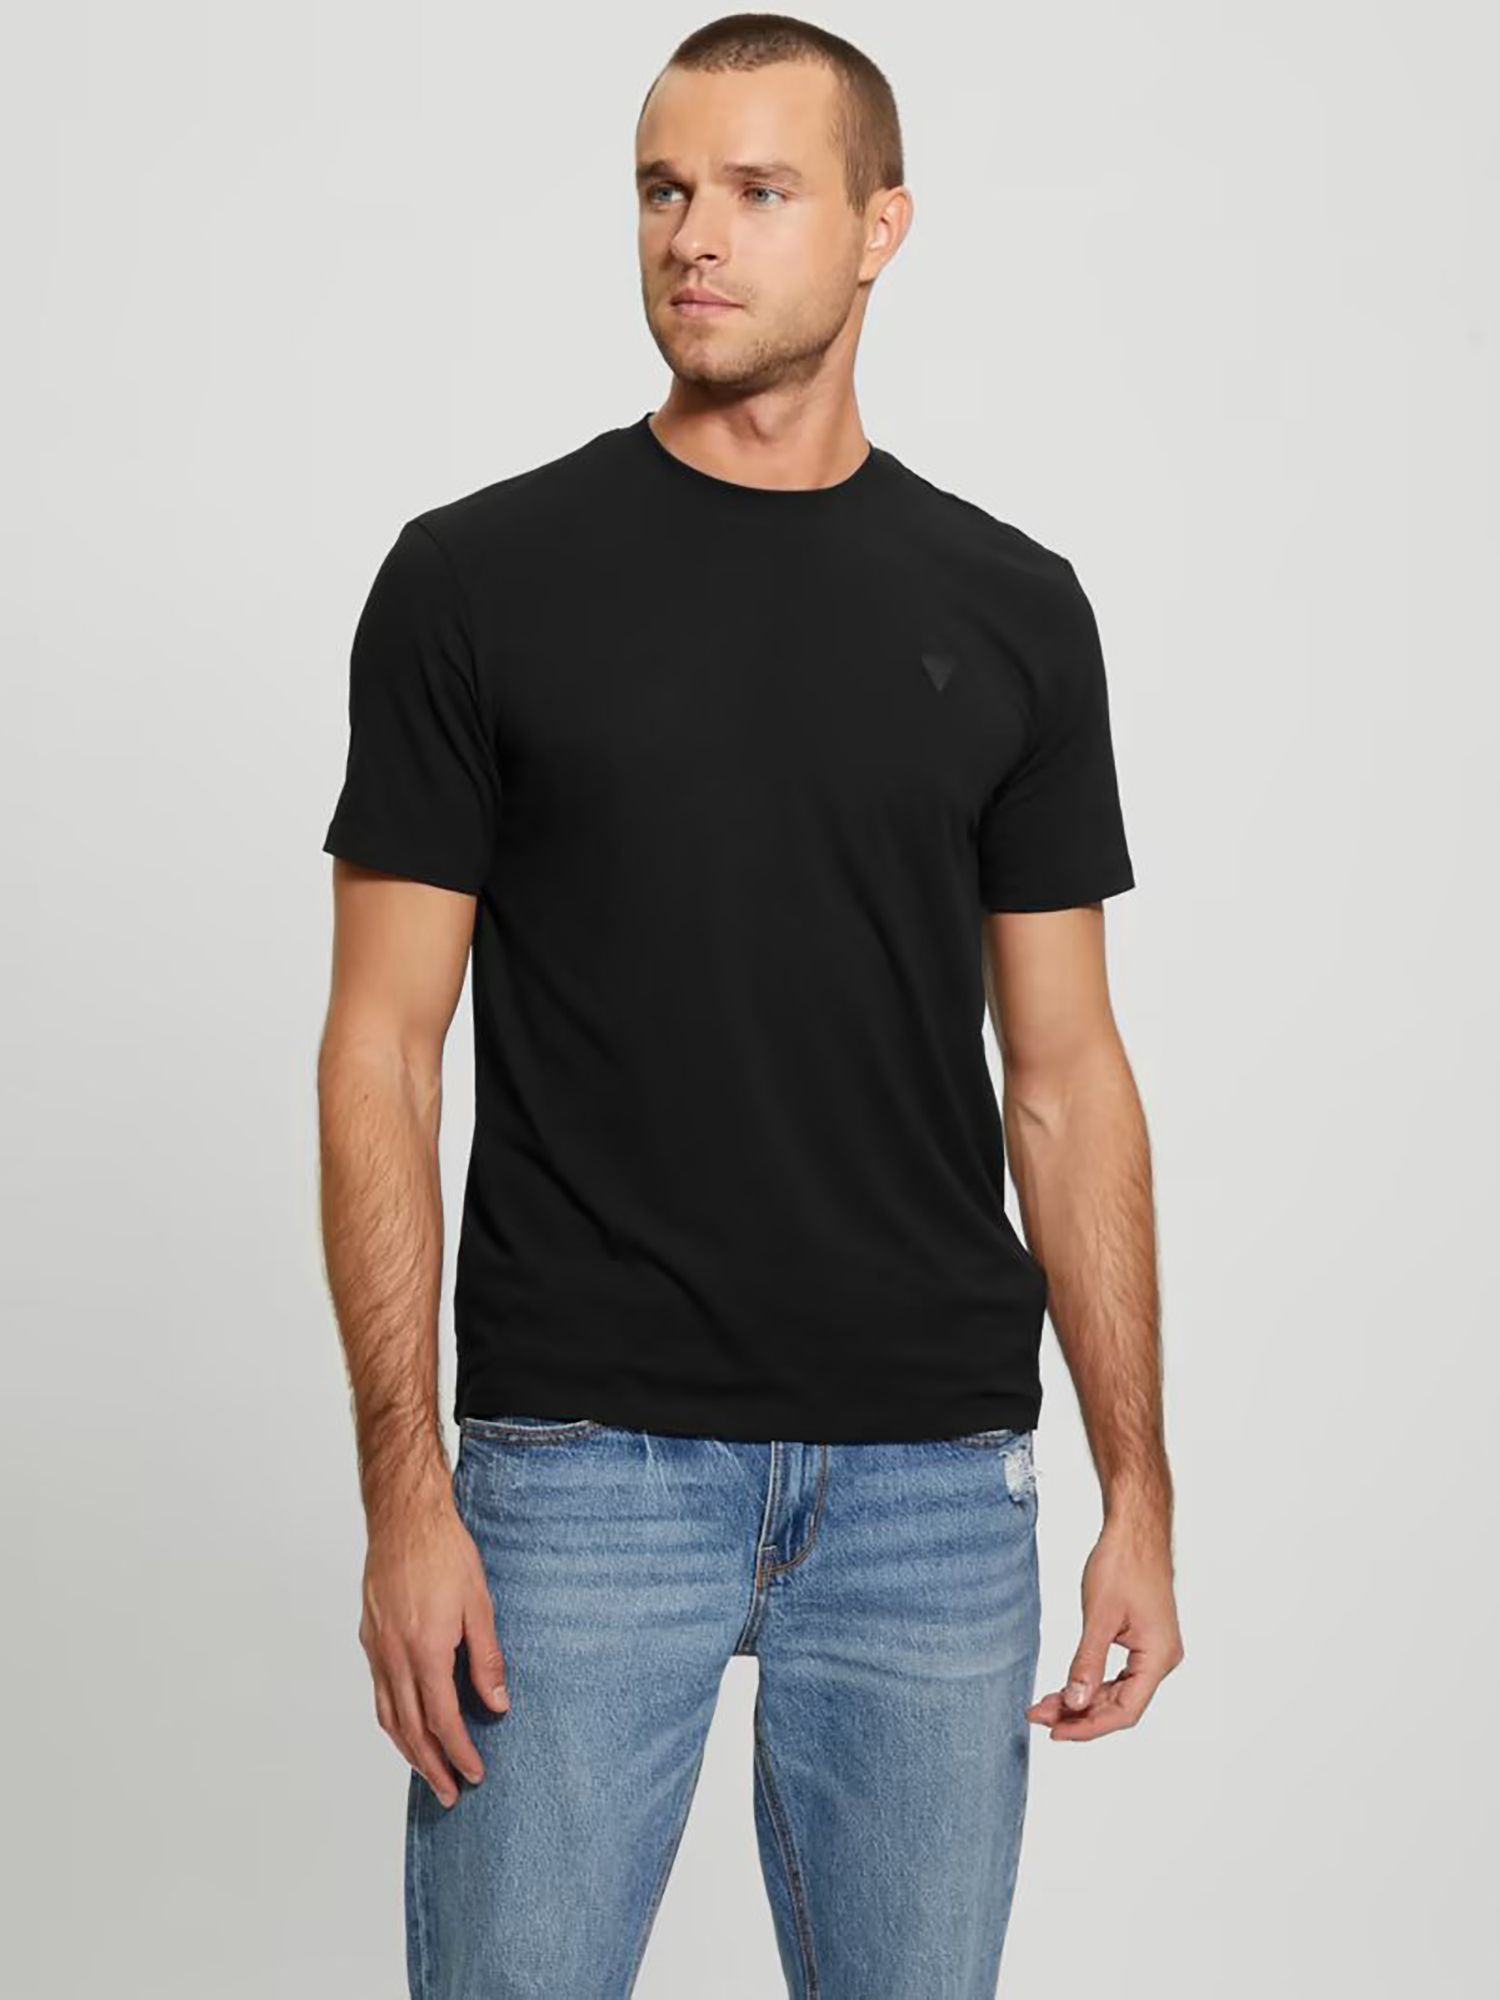 GUESS Hedley Cotton Blend T-Shirt, Jet Black, S